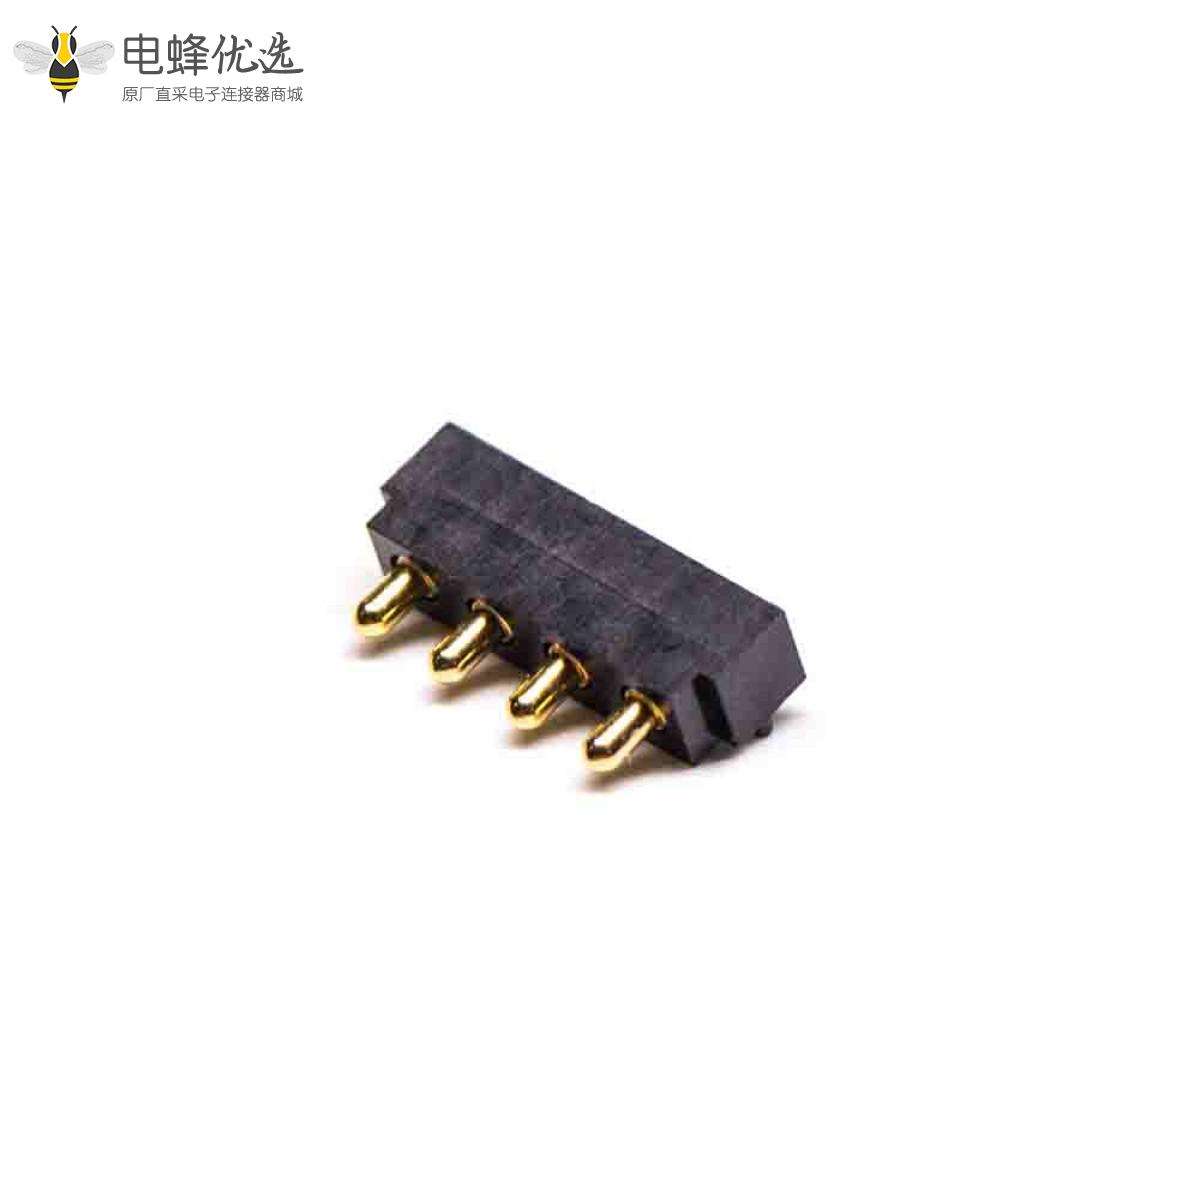 Pogo Pin连接器焊接4芯间距2.5MM多Pin系列F型平放式